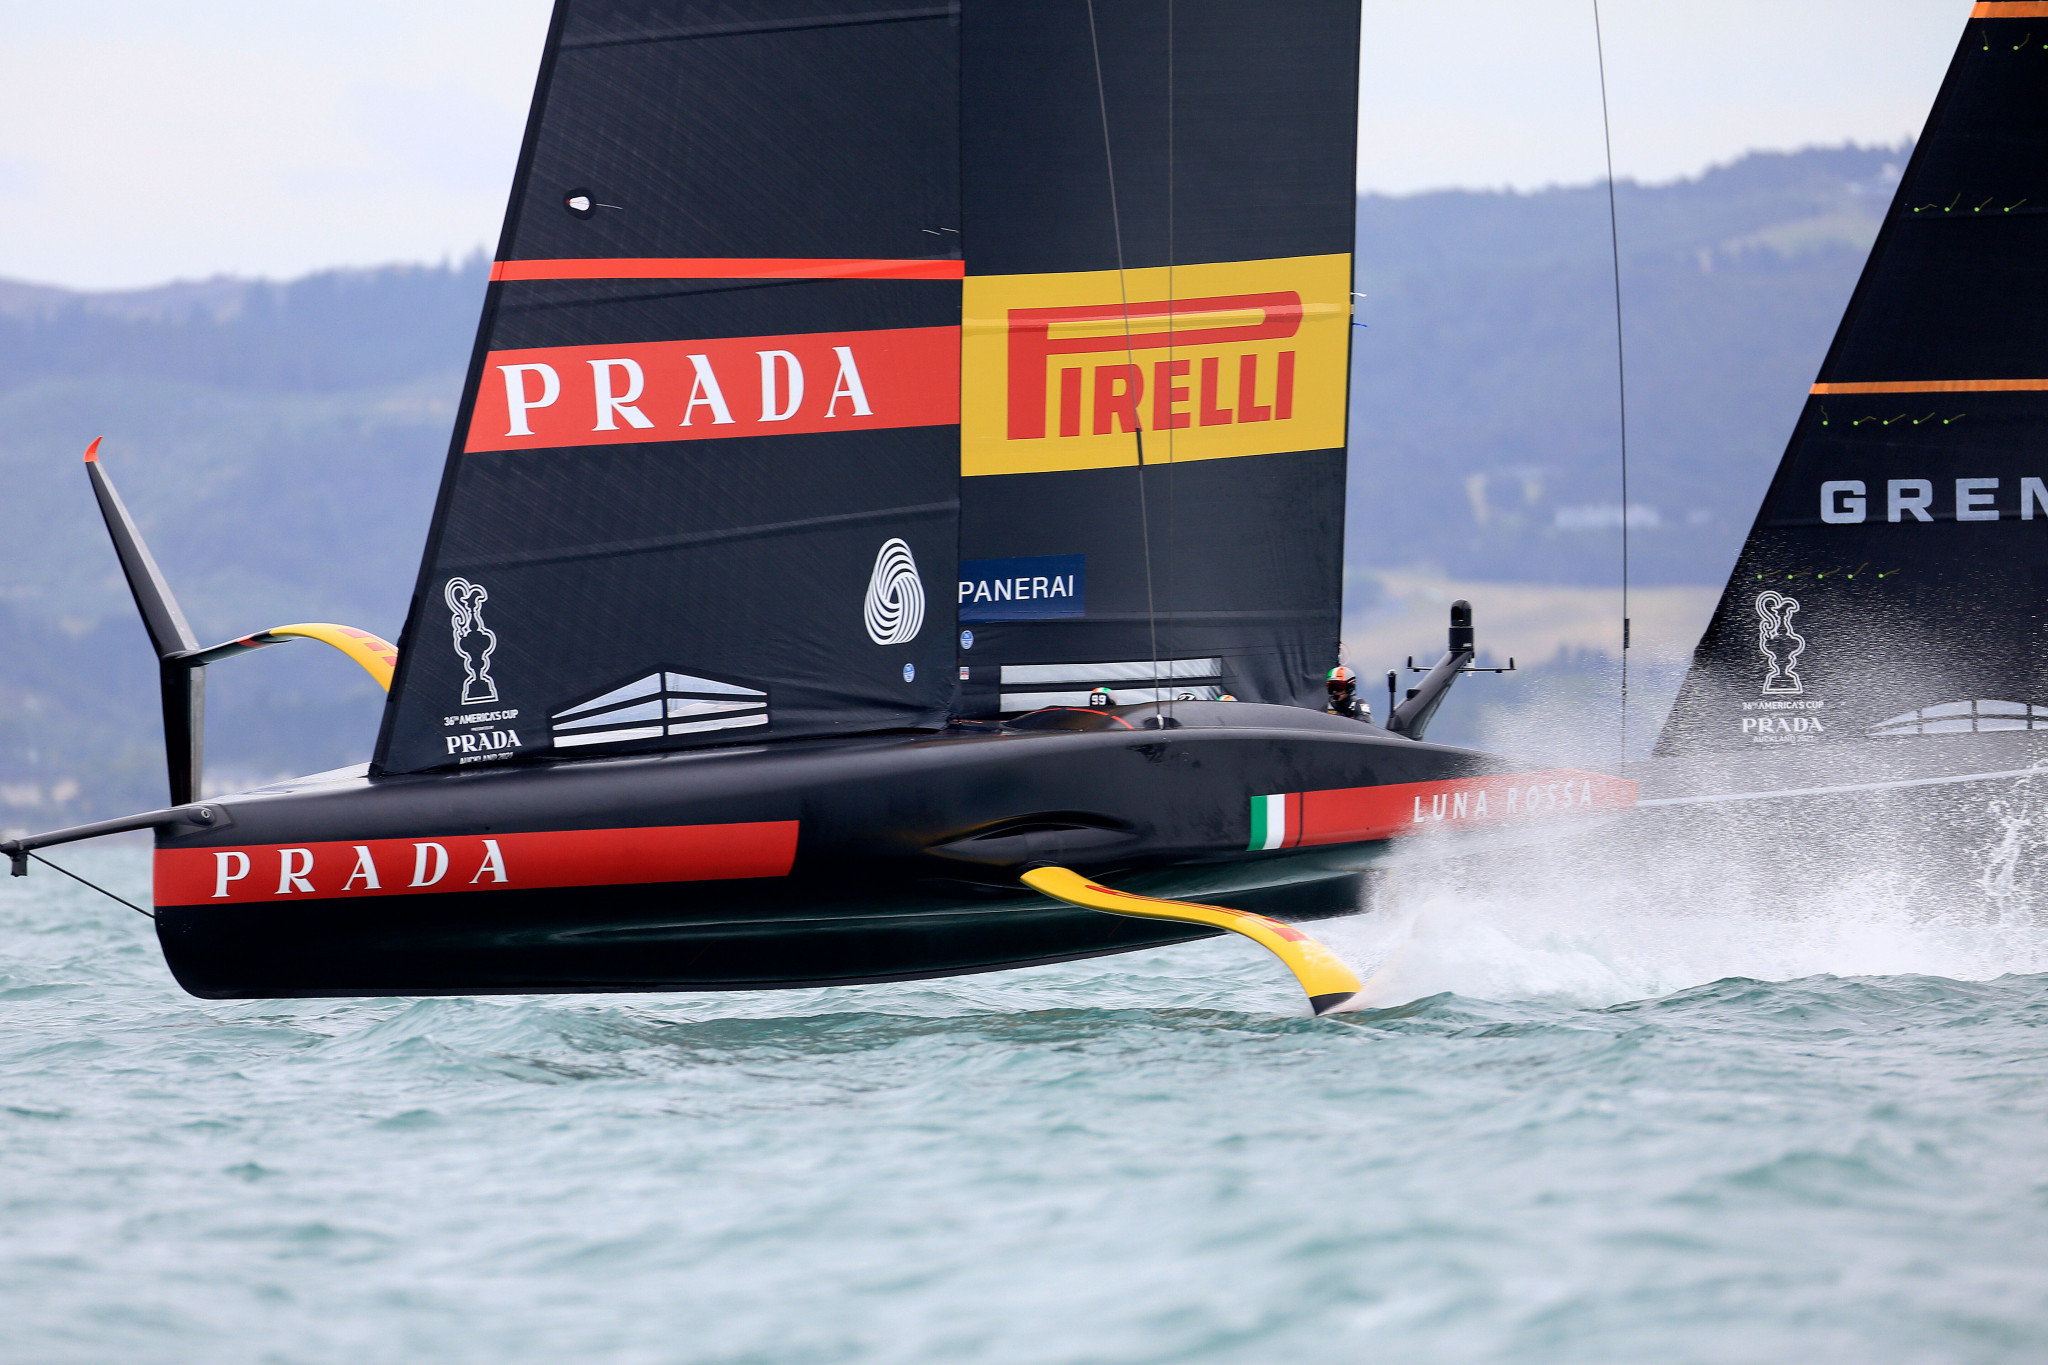 Organisers postpone next Prada Cup race as Auckland enters three-day lockdown